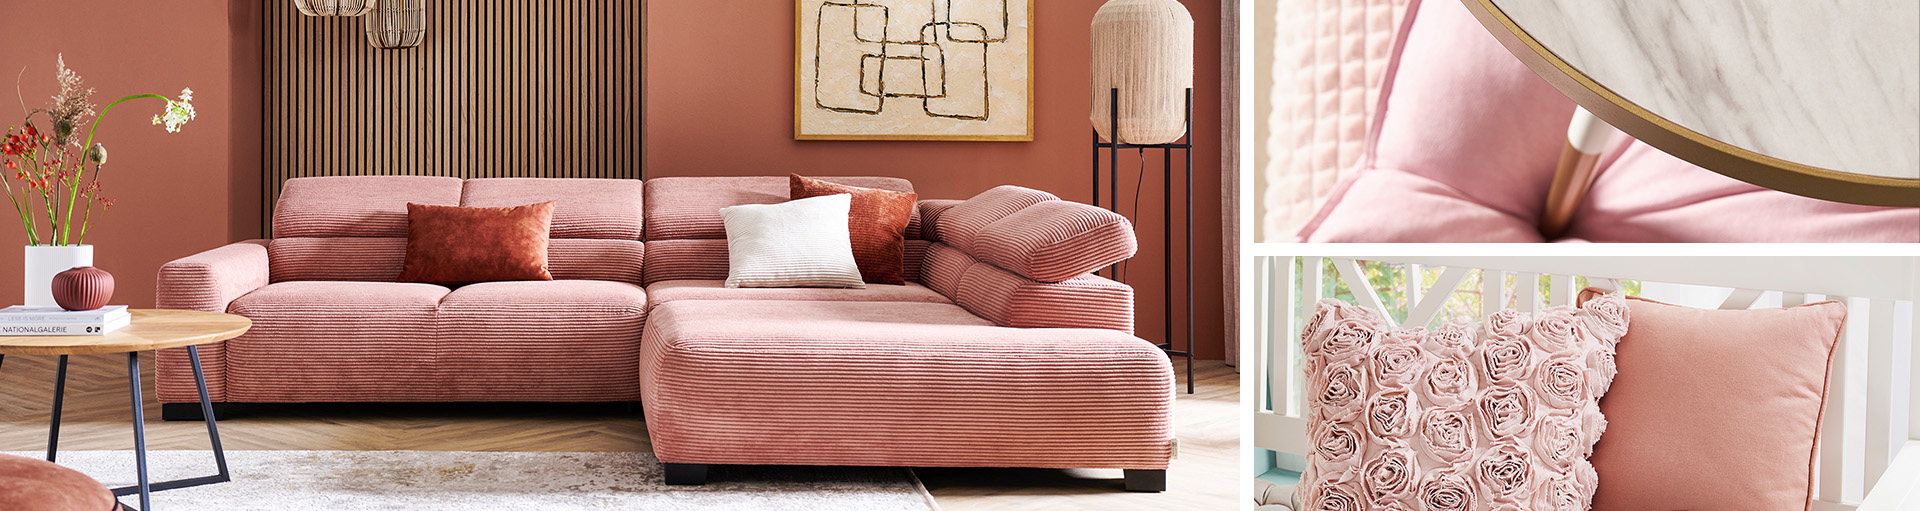 Sofa.de Inspiration   Romantisches Rosé